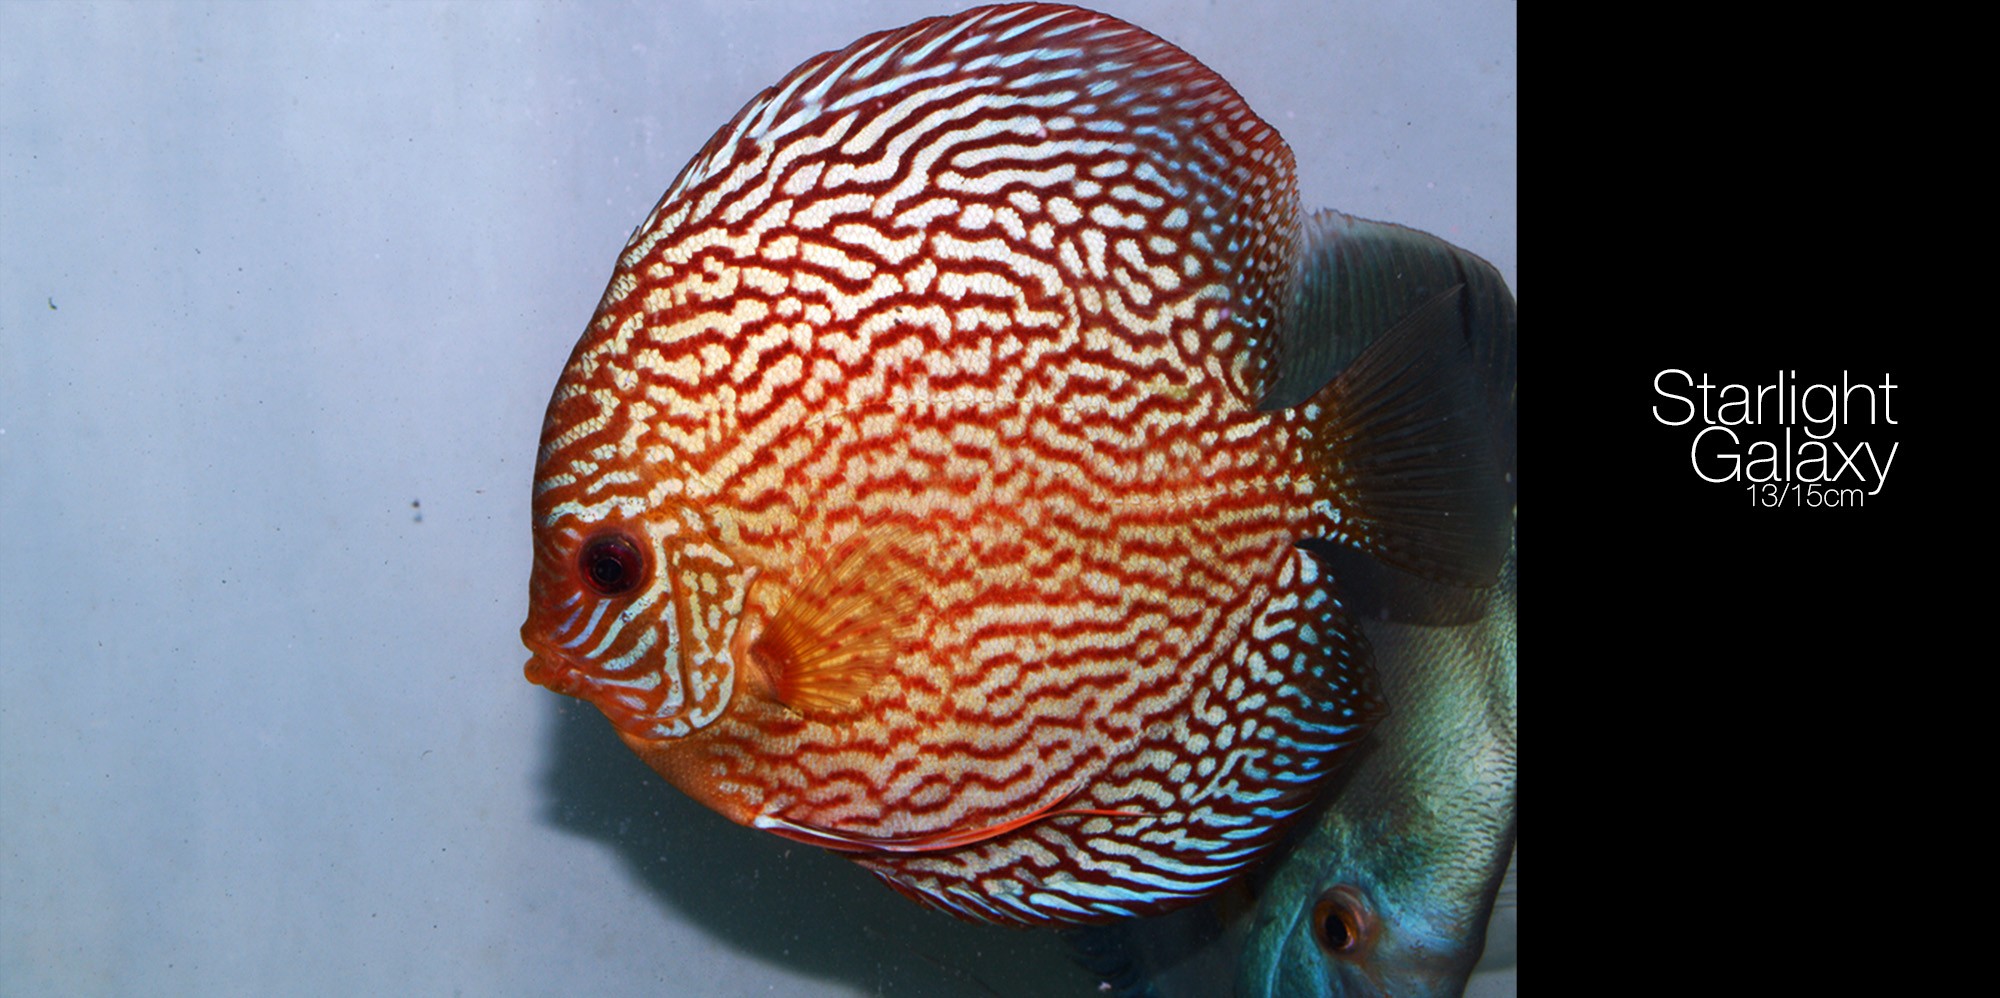 General 2000x998 fish animals aquarium closeup